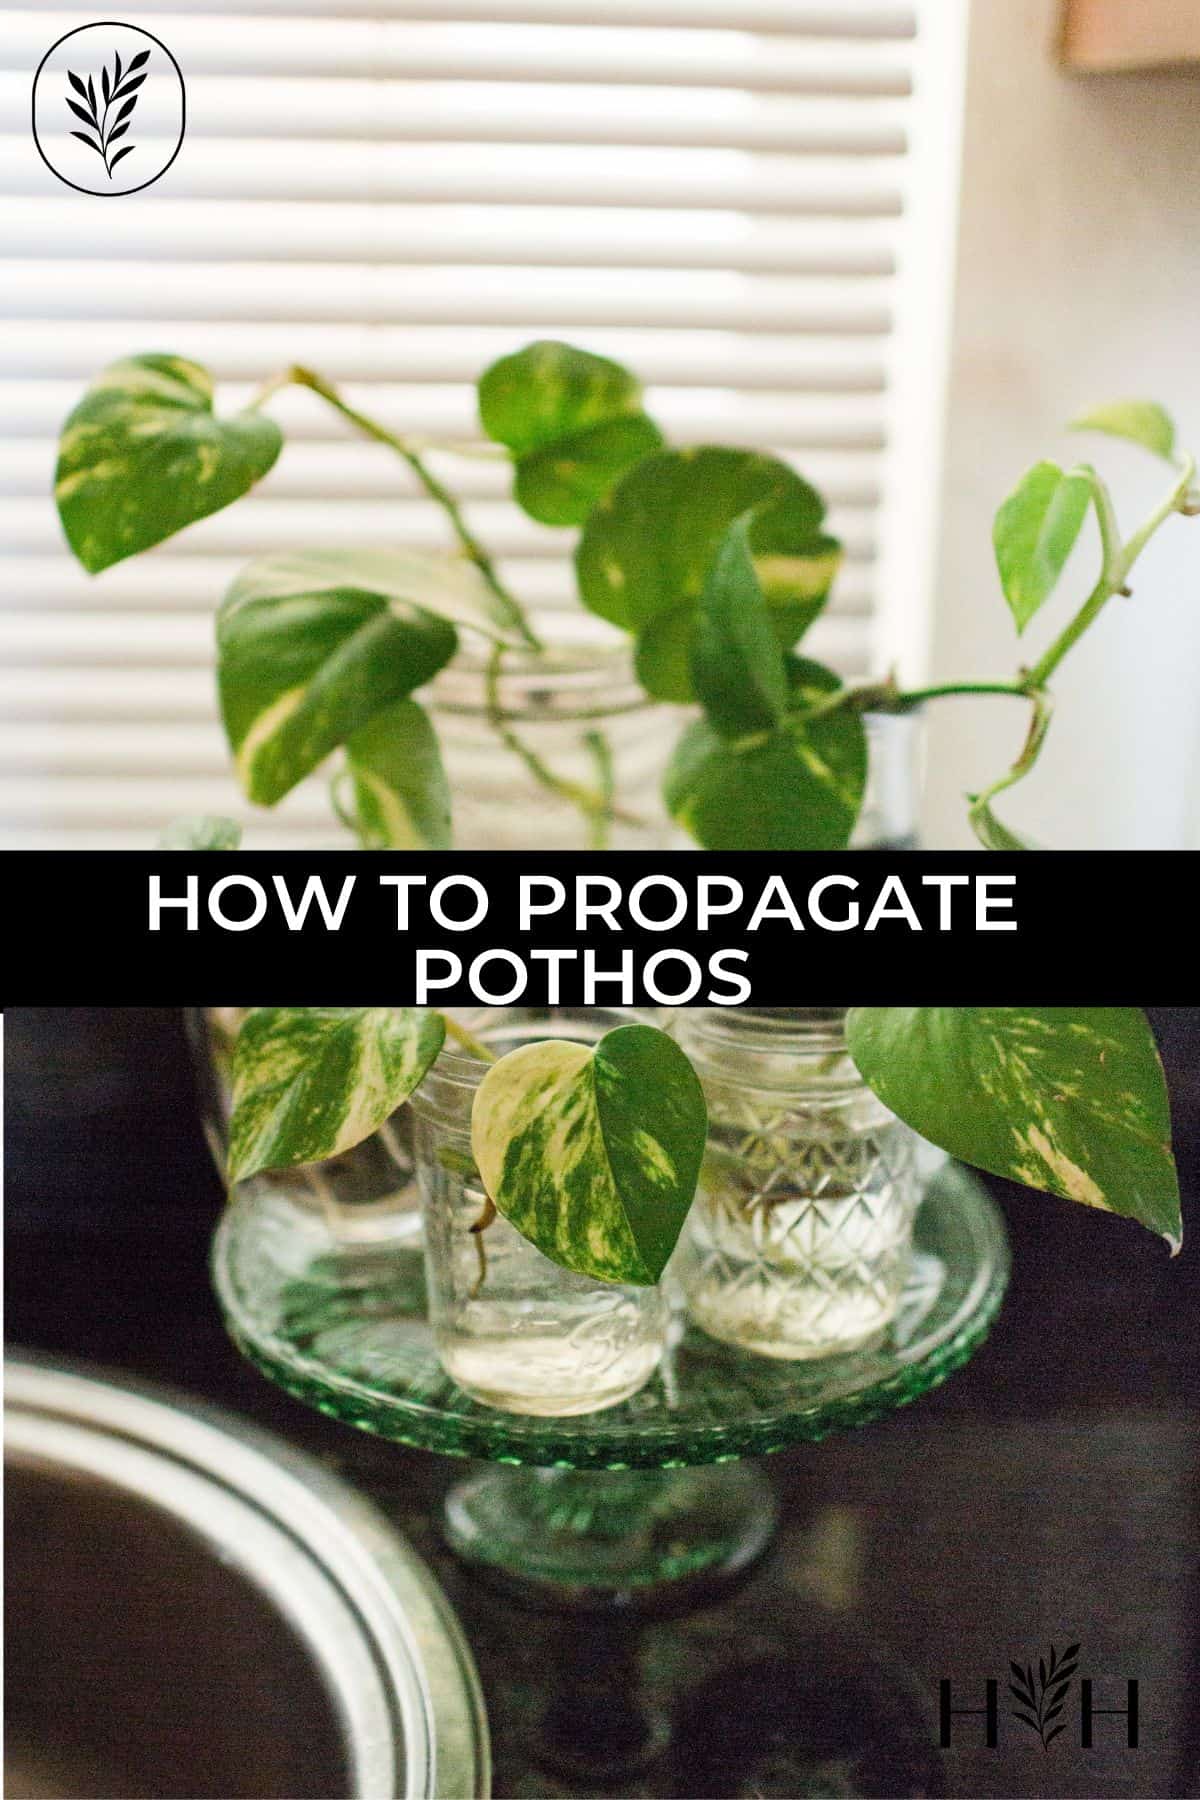 How to propagate pothos via @home4theharvest